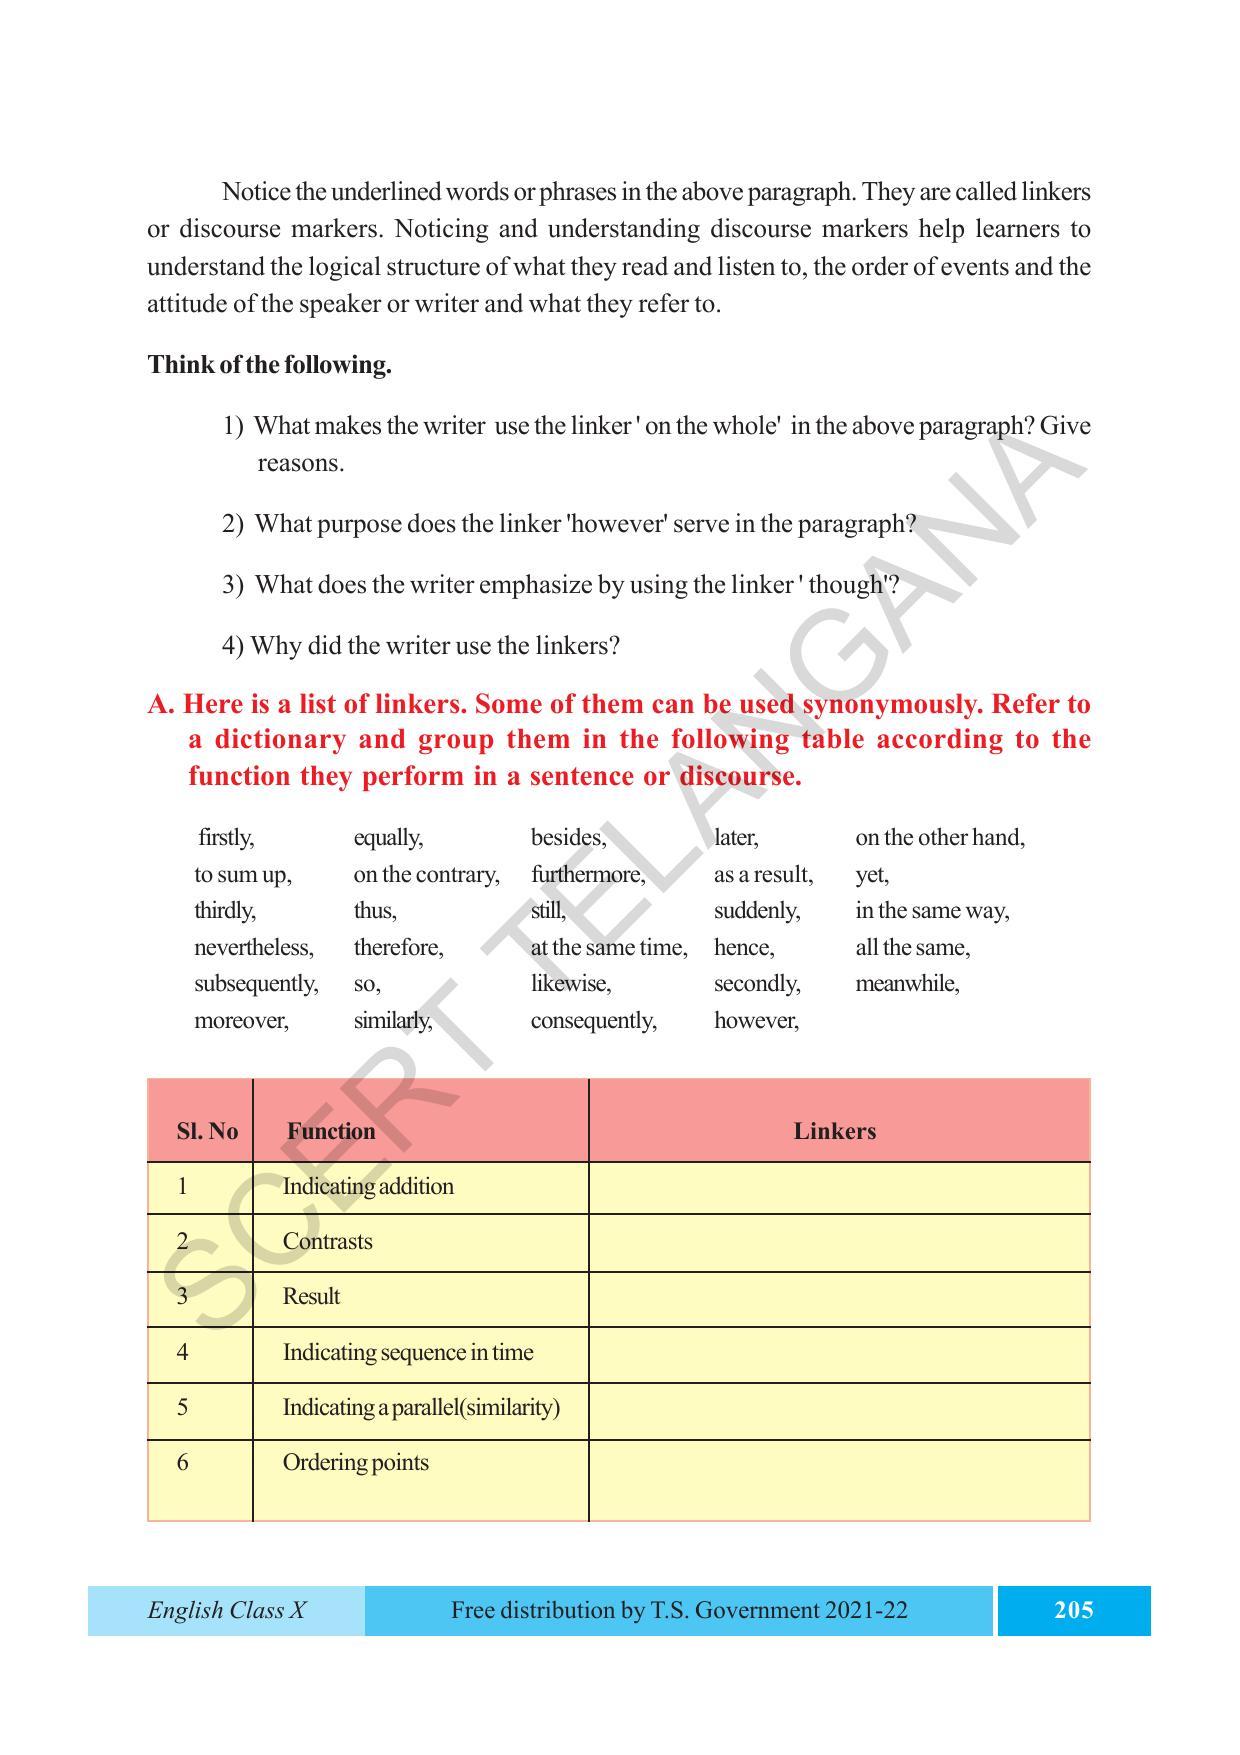 TS SCERT Class 10 EnglishText Book - Page 215